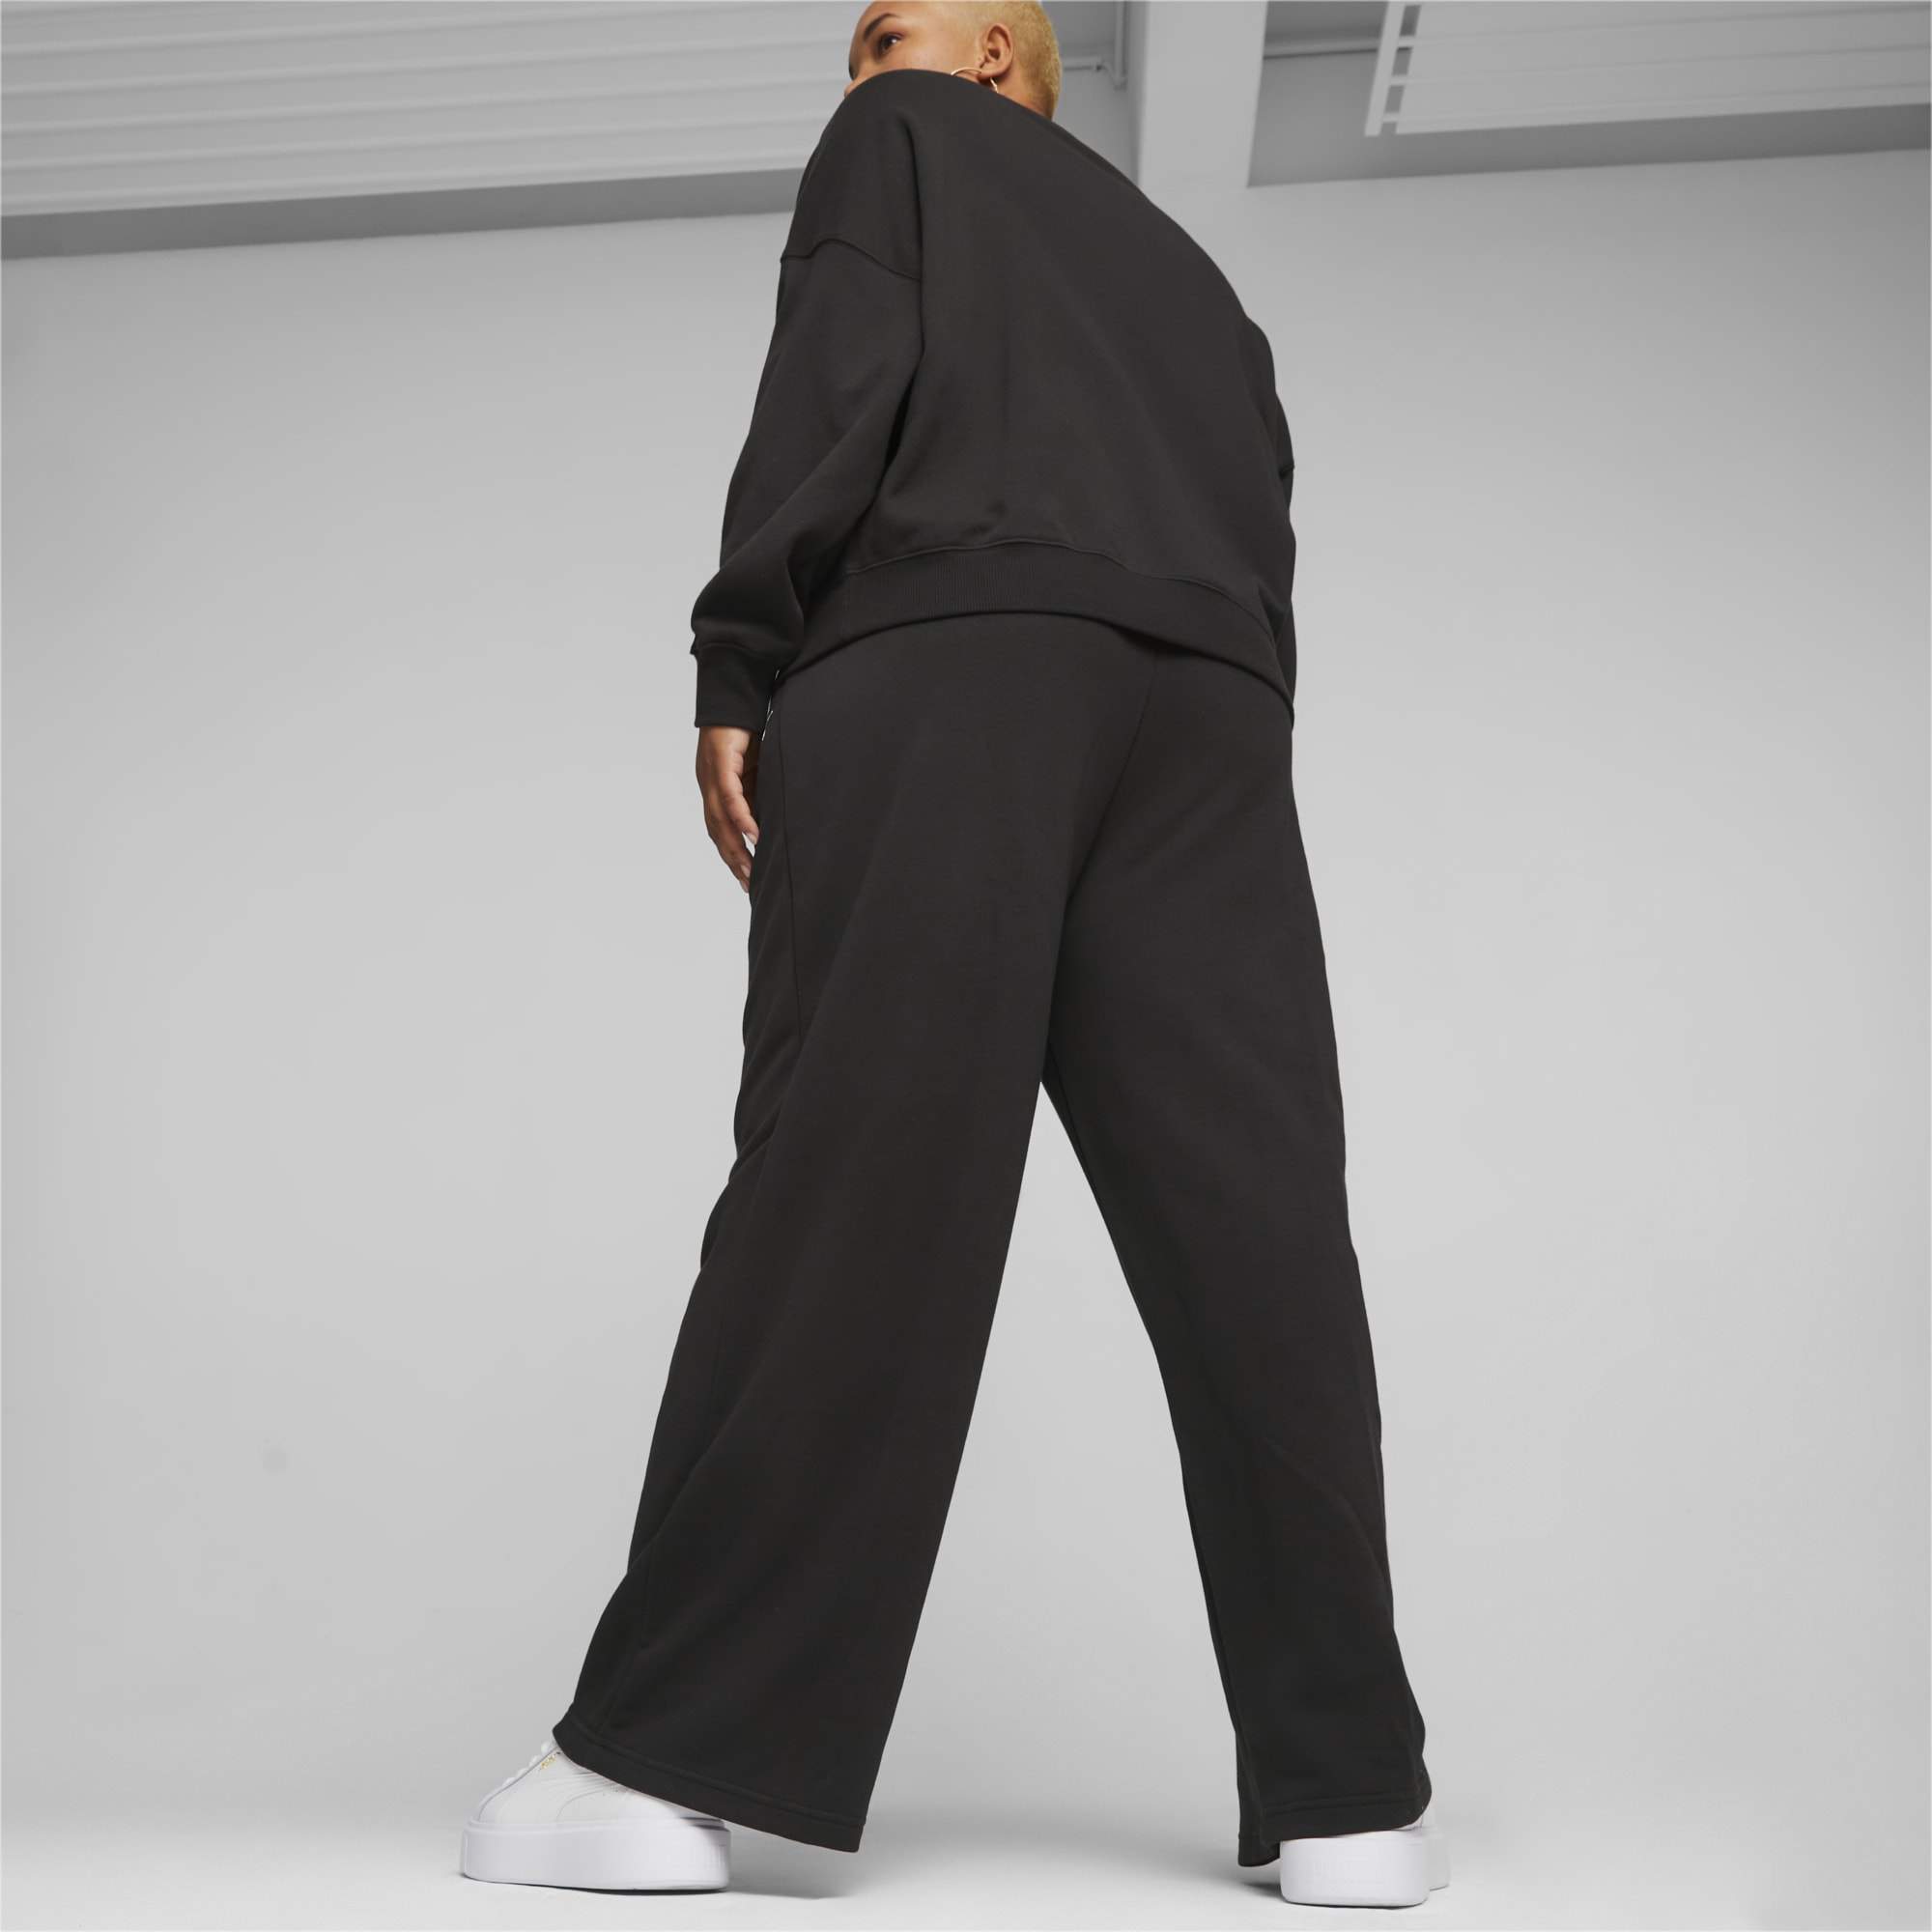 PUMA Classics Women's Relaxed Sweatpants, Black, Size L, Clothing